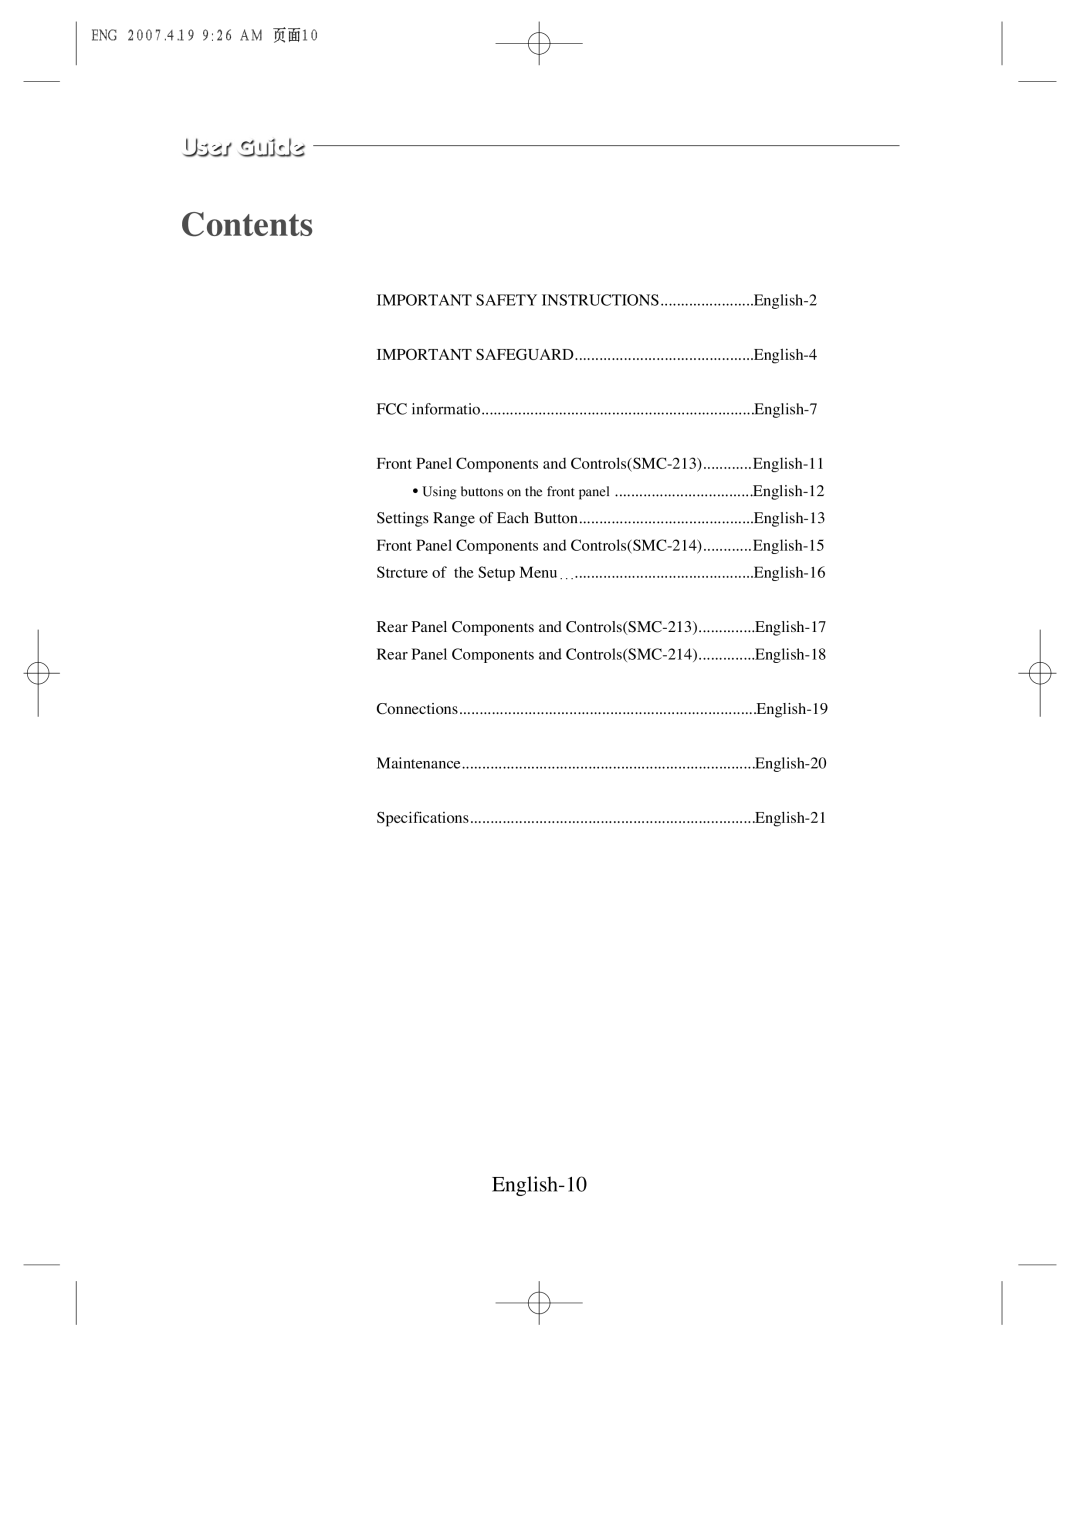 Samsung SMC-213, SMC-214 U manual Contents, English-10 